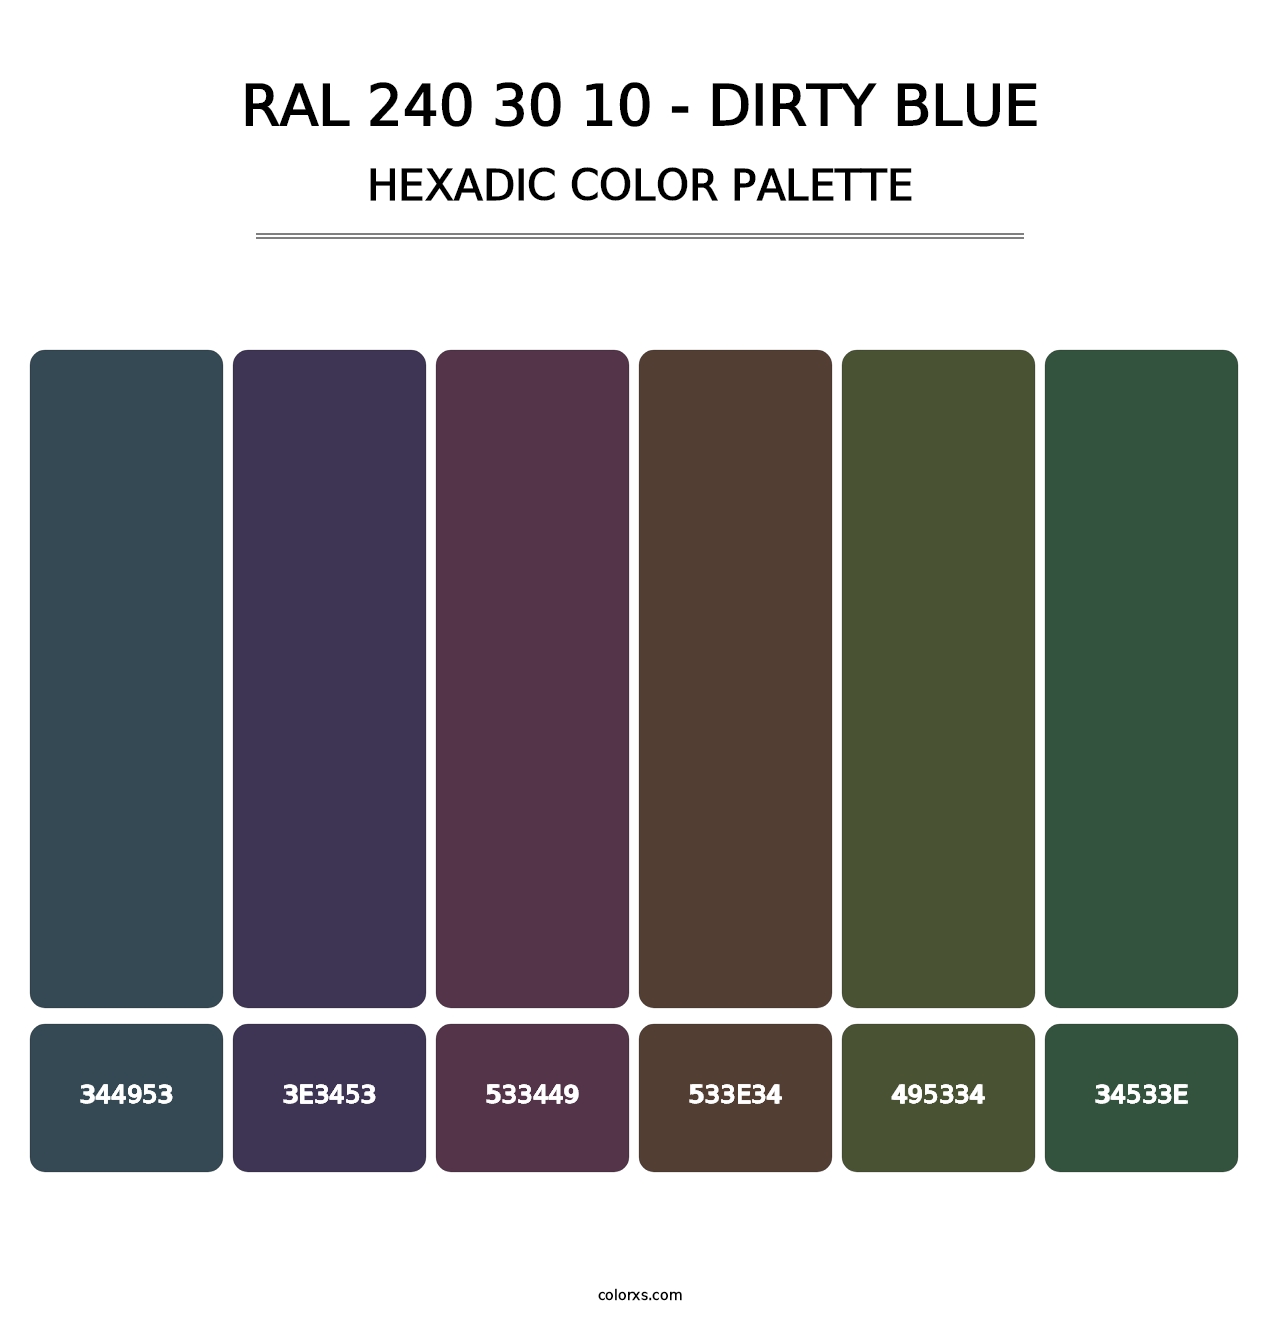 RAL 240 30 10 - Dirty Blue - Hexadic Color Palette